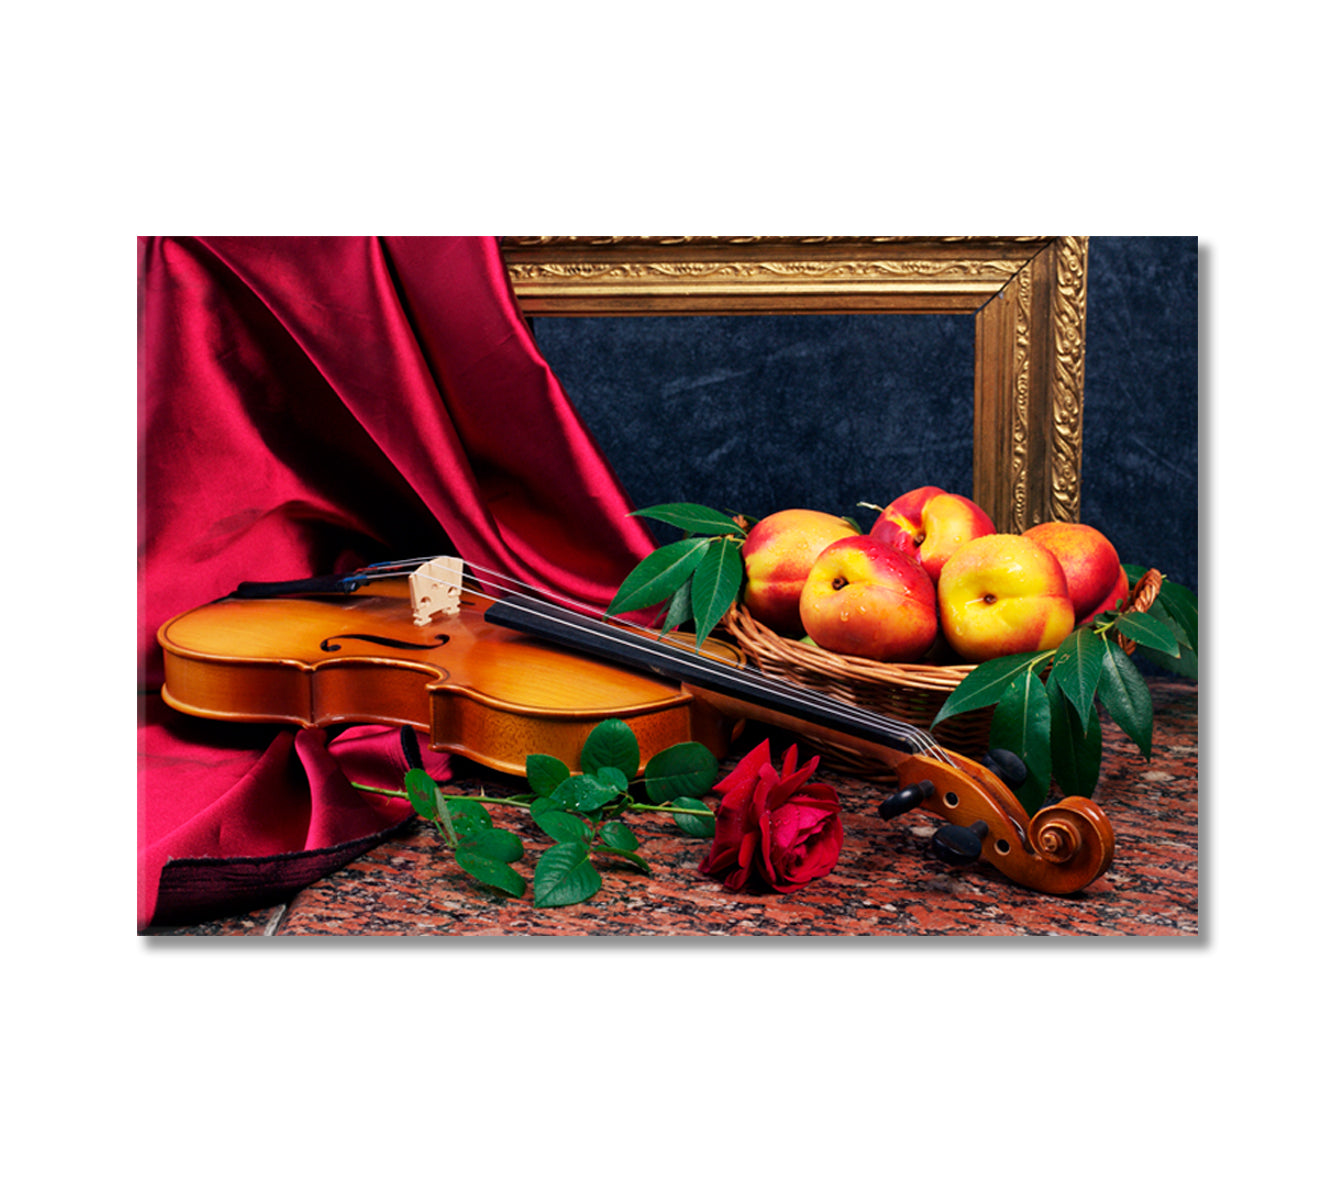 Still Life Violin and Red Rose Canvas Print-Canvas Print-CetArt-1 Panel-24x16 inches-CetArt